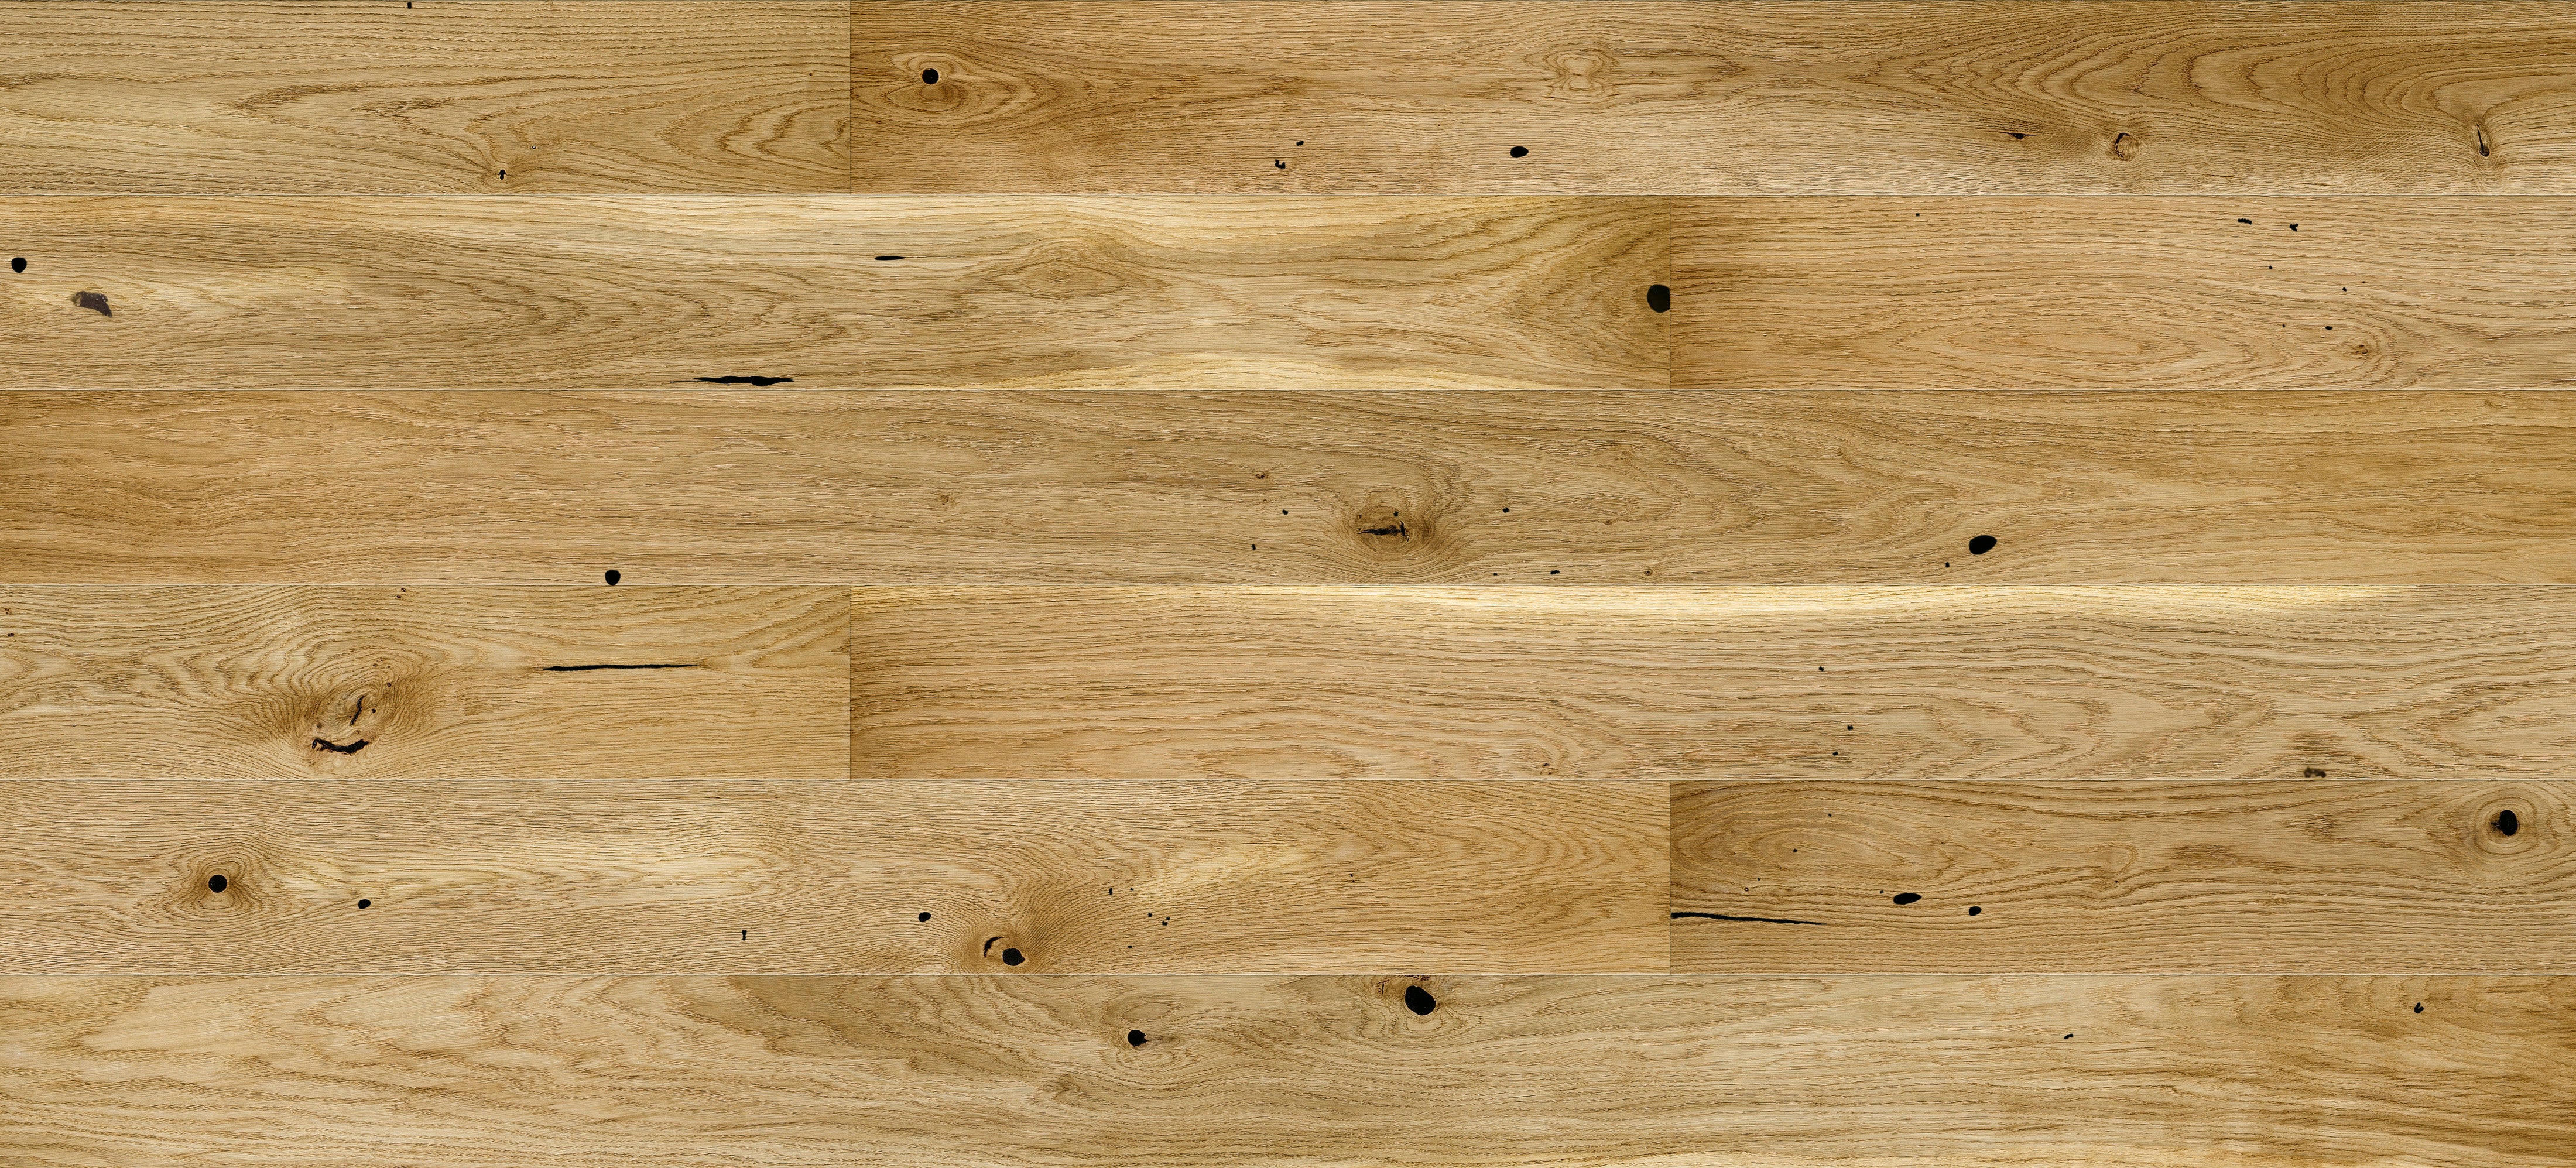 Rustic natural wood flooring open space